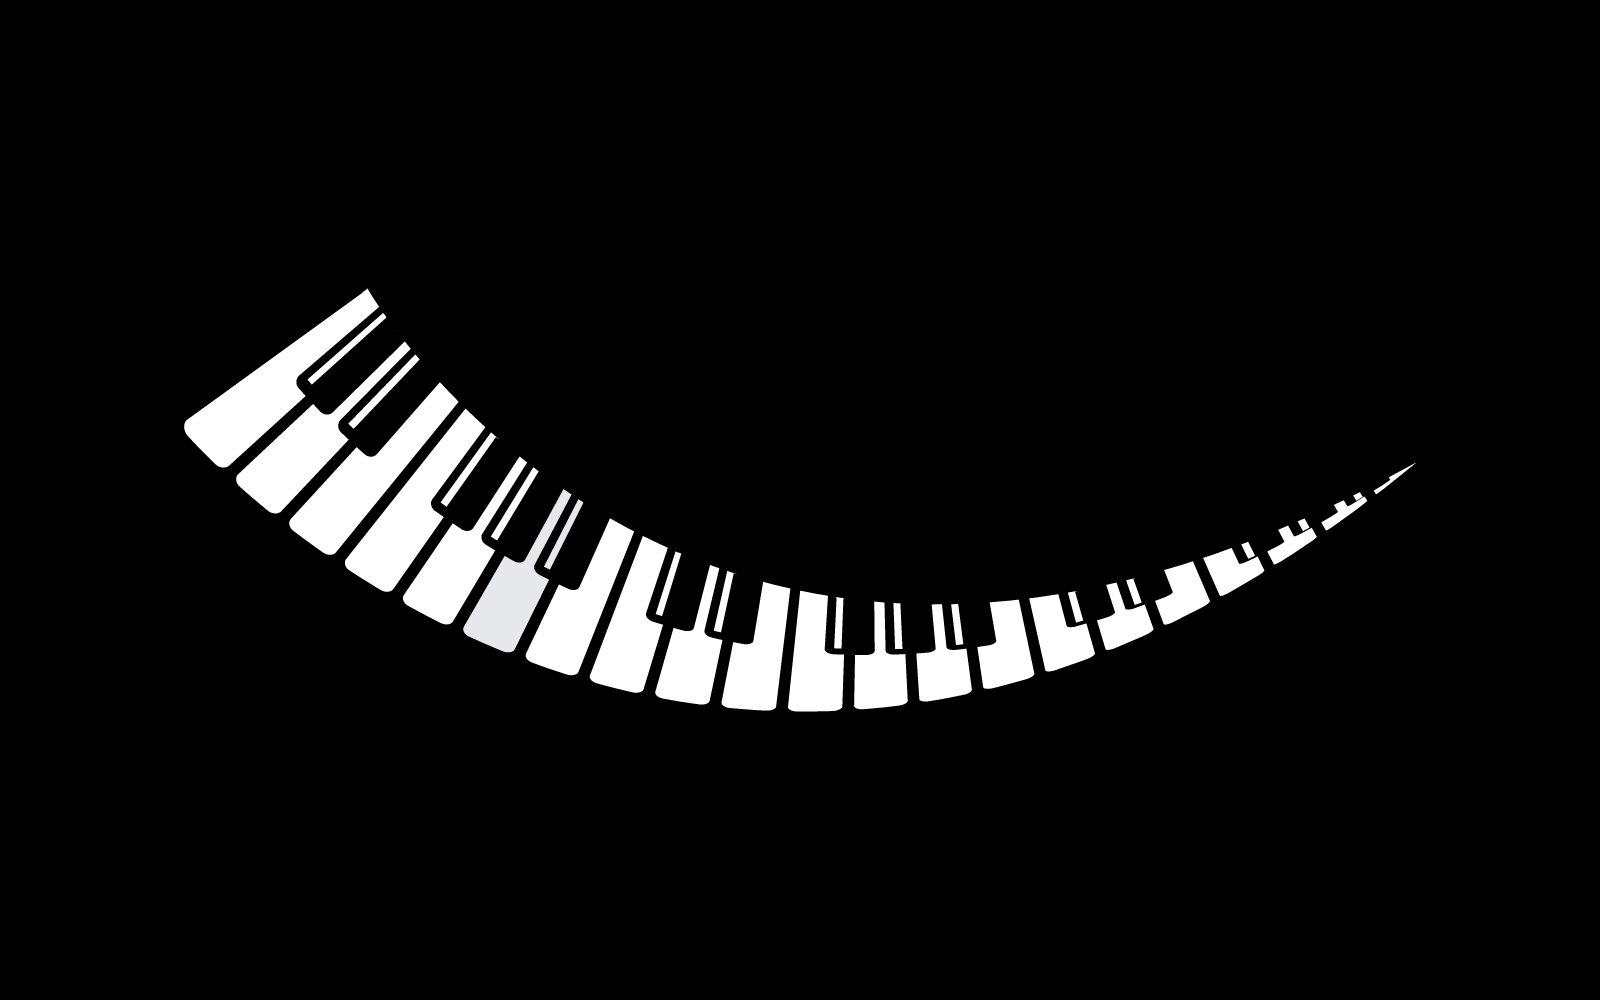 Piano on black background vector illustration design template